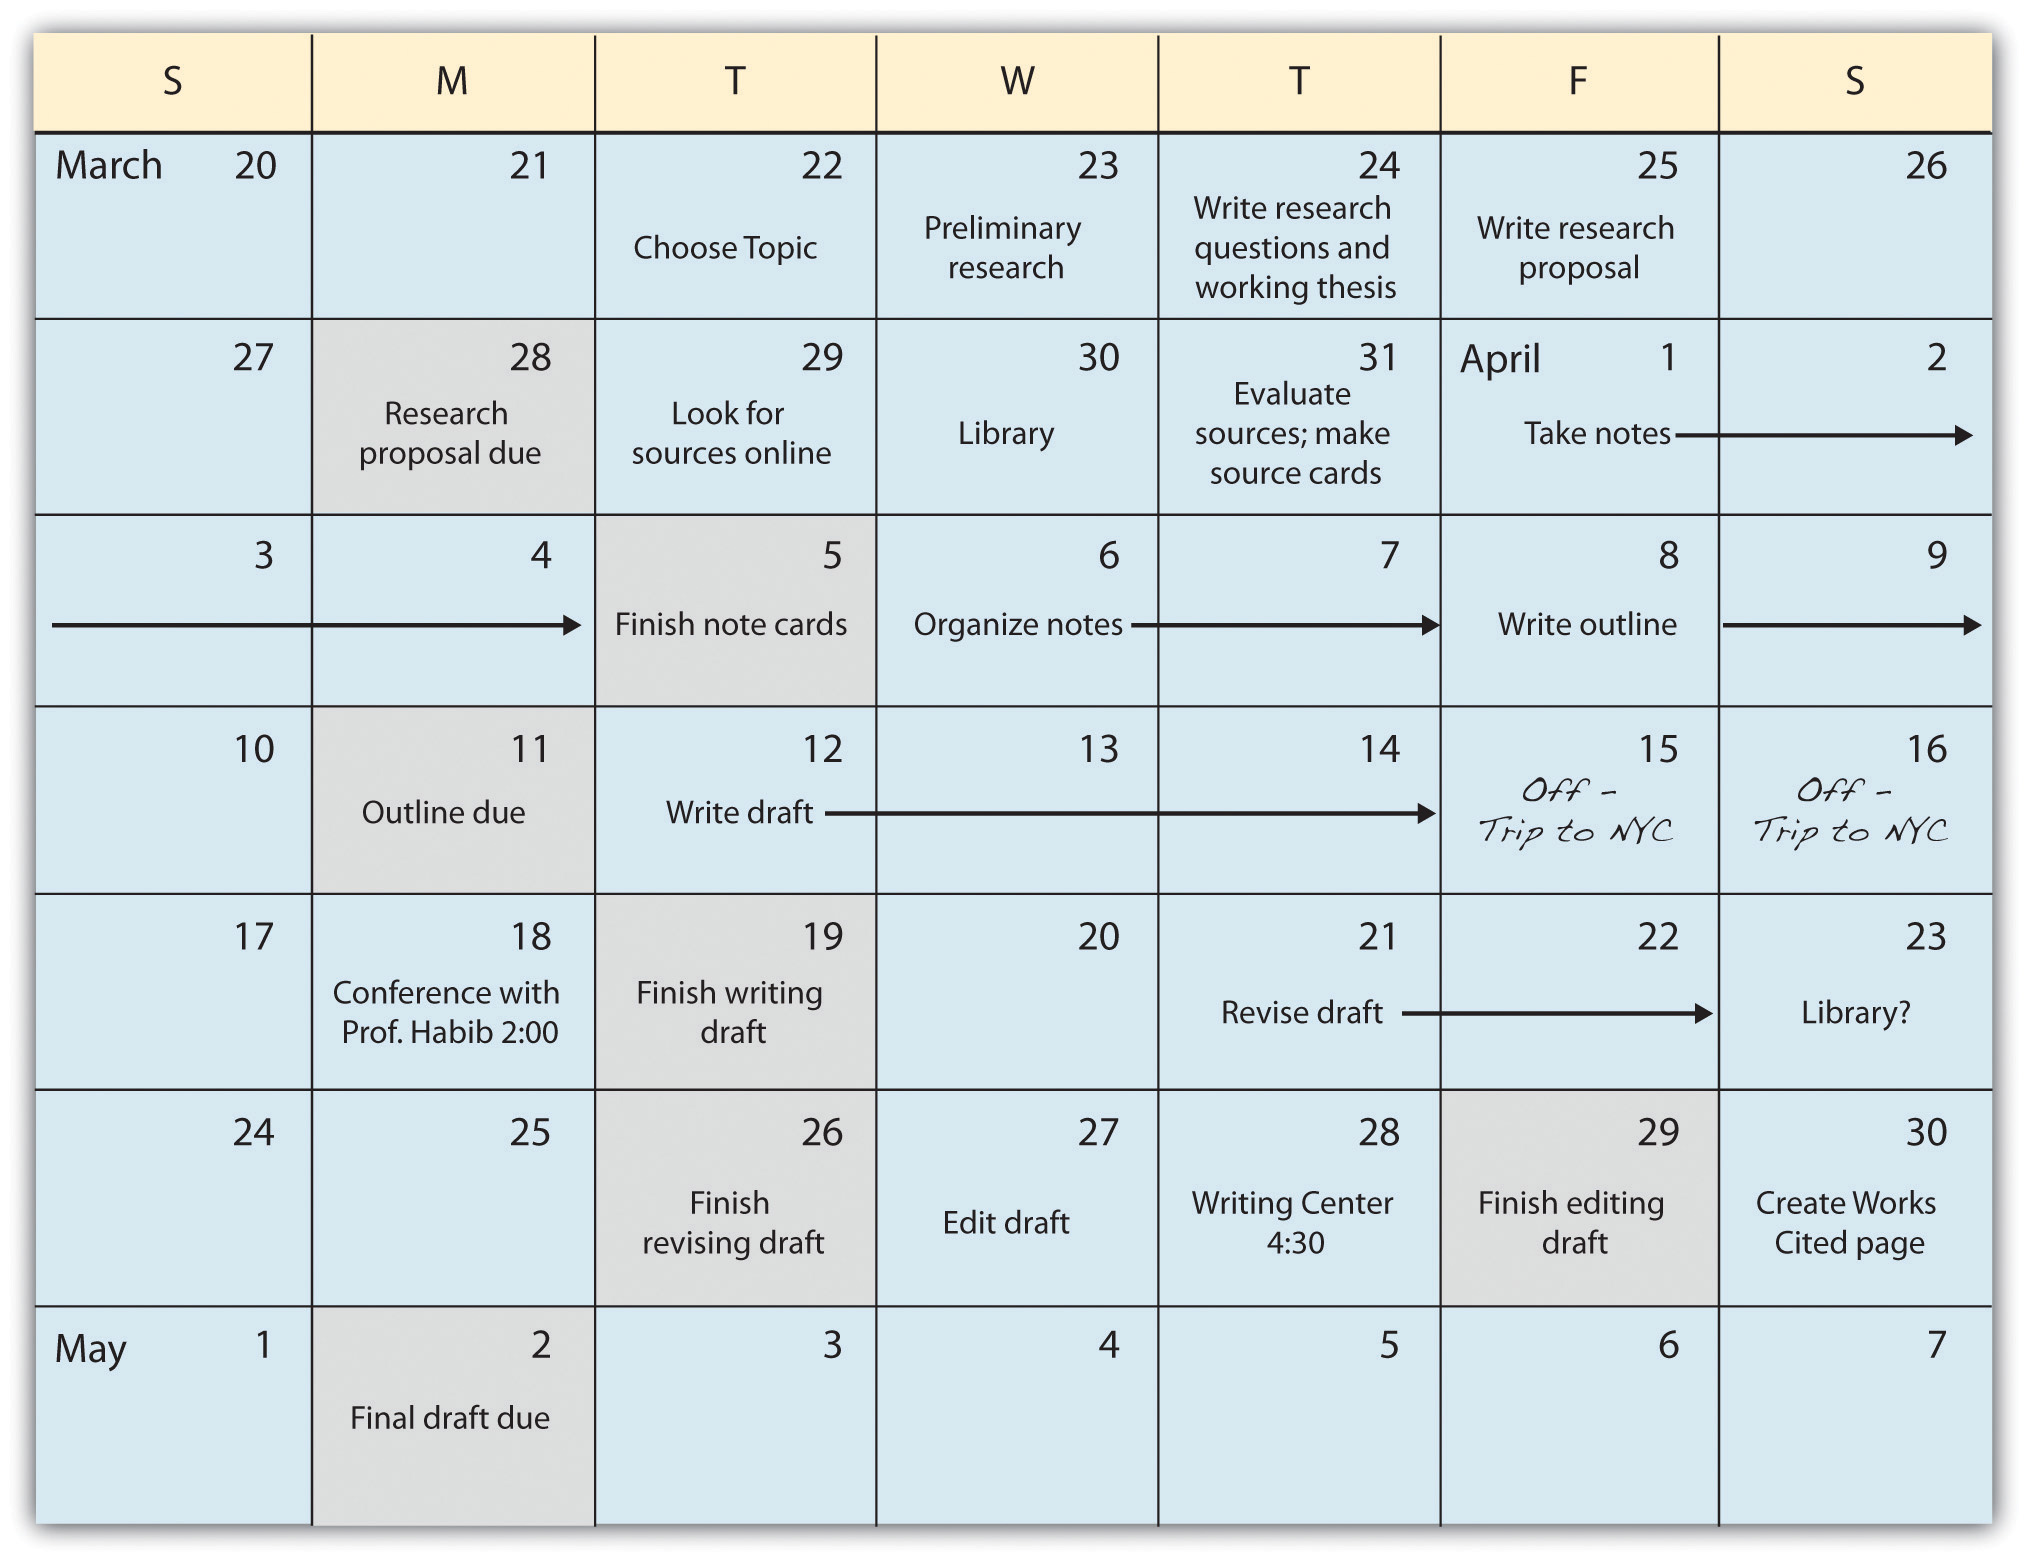 Jorge's schedule